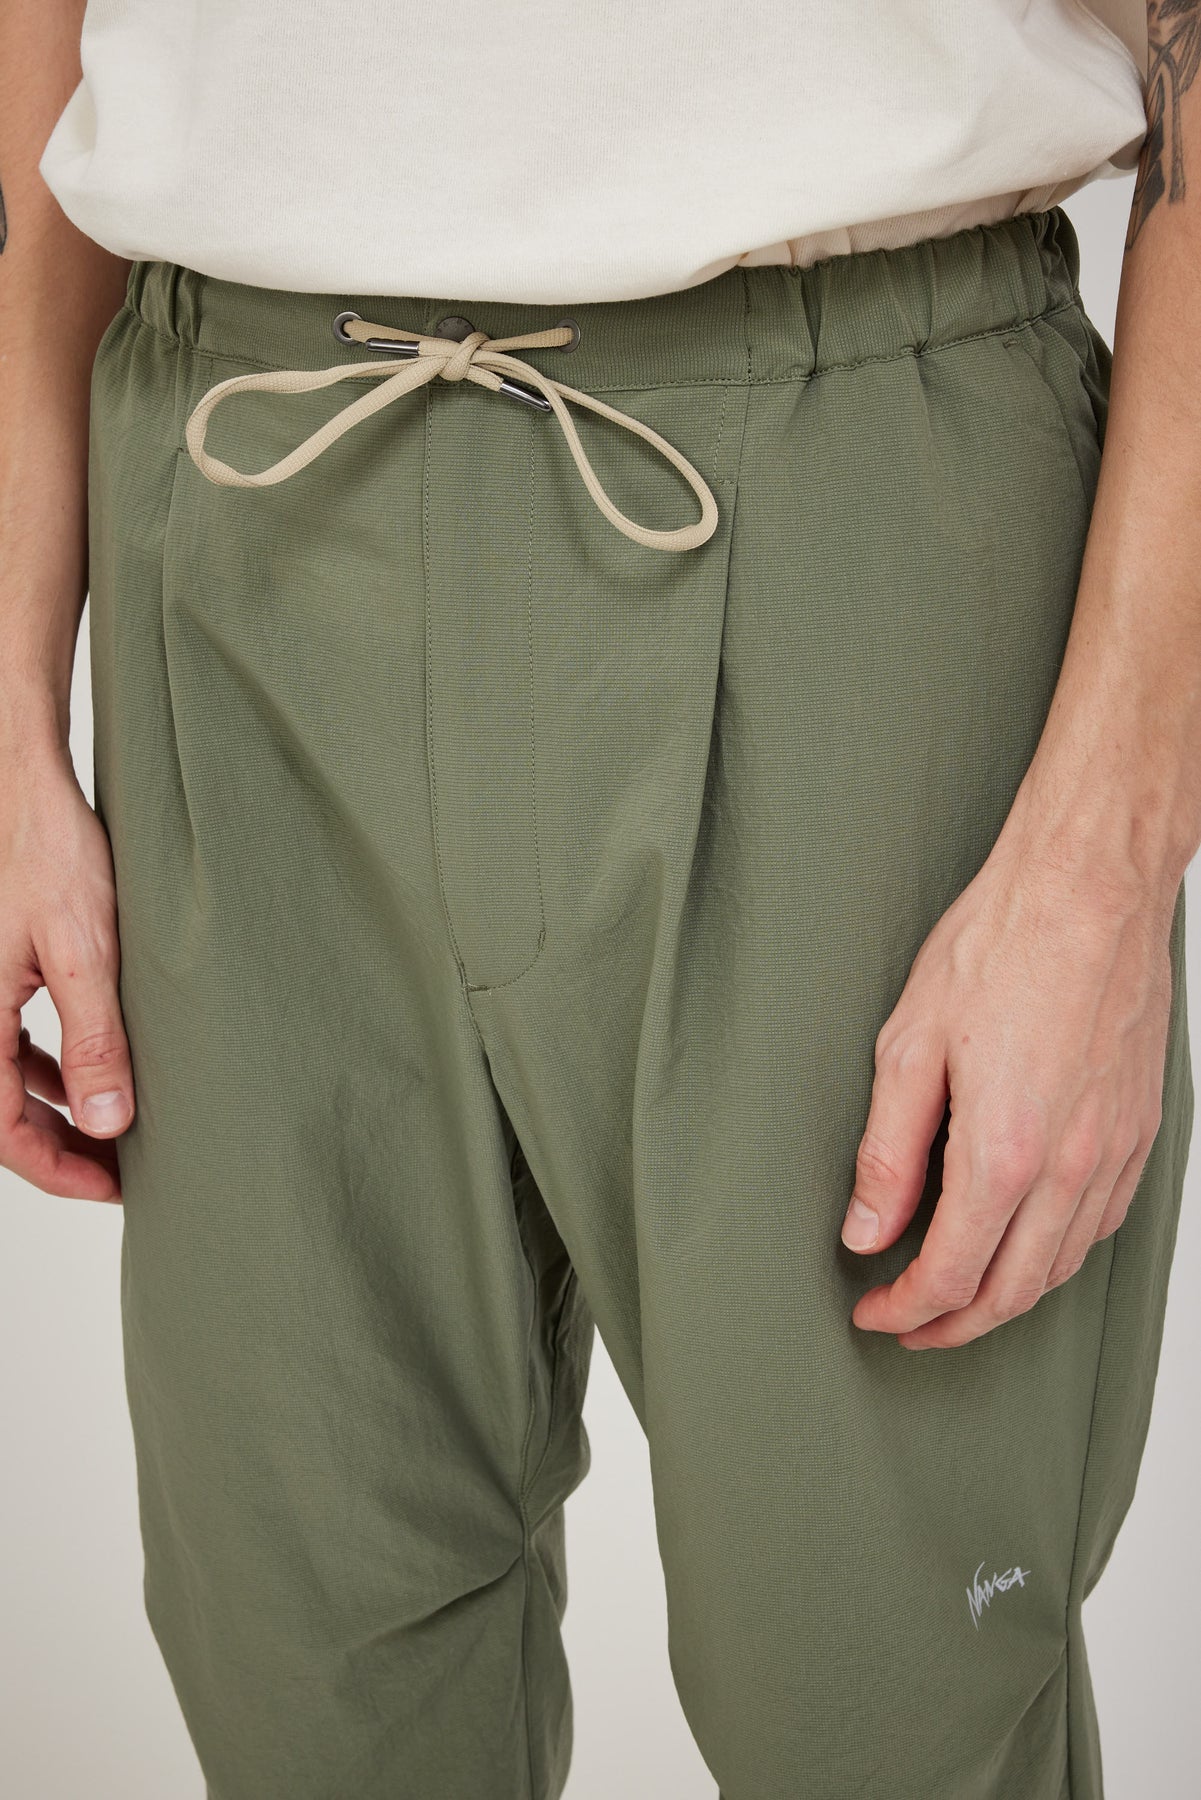 NANGA Air Cloth Comfy Pants Olive Drab | Maplestore